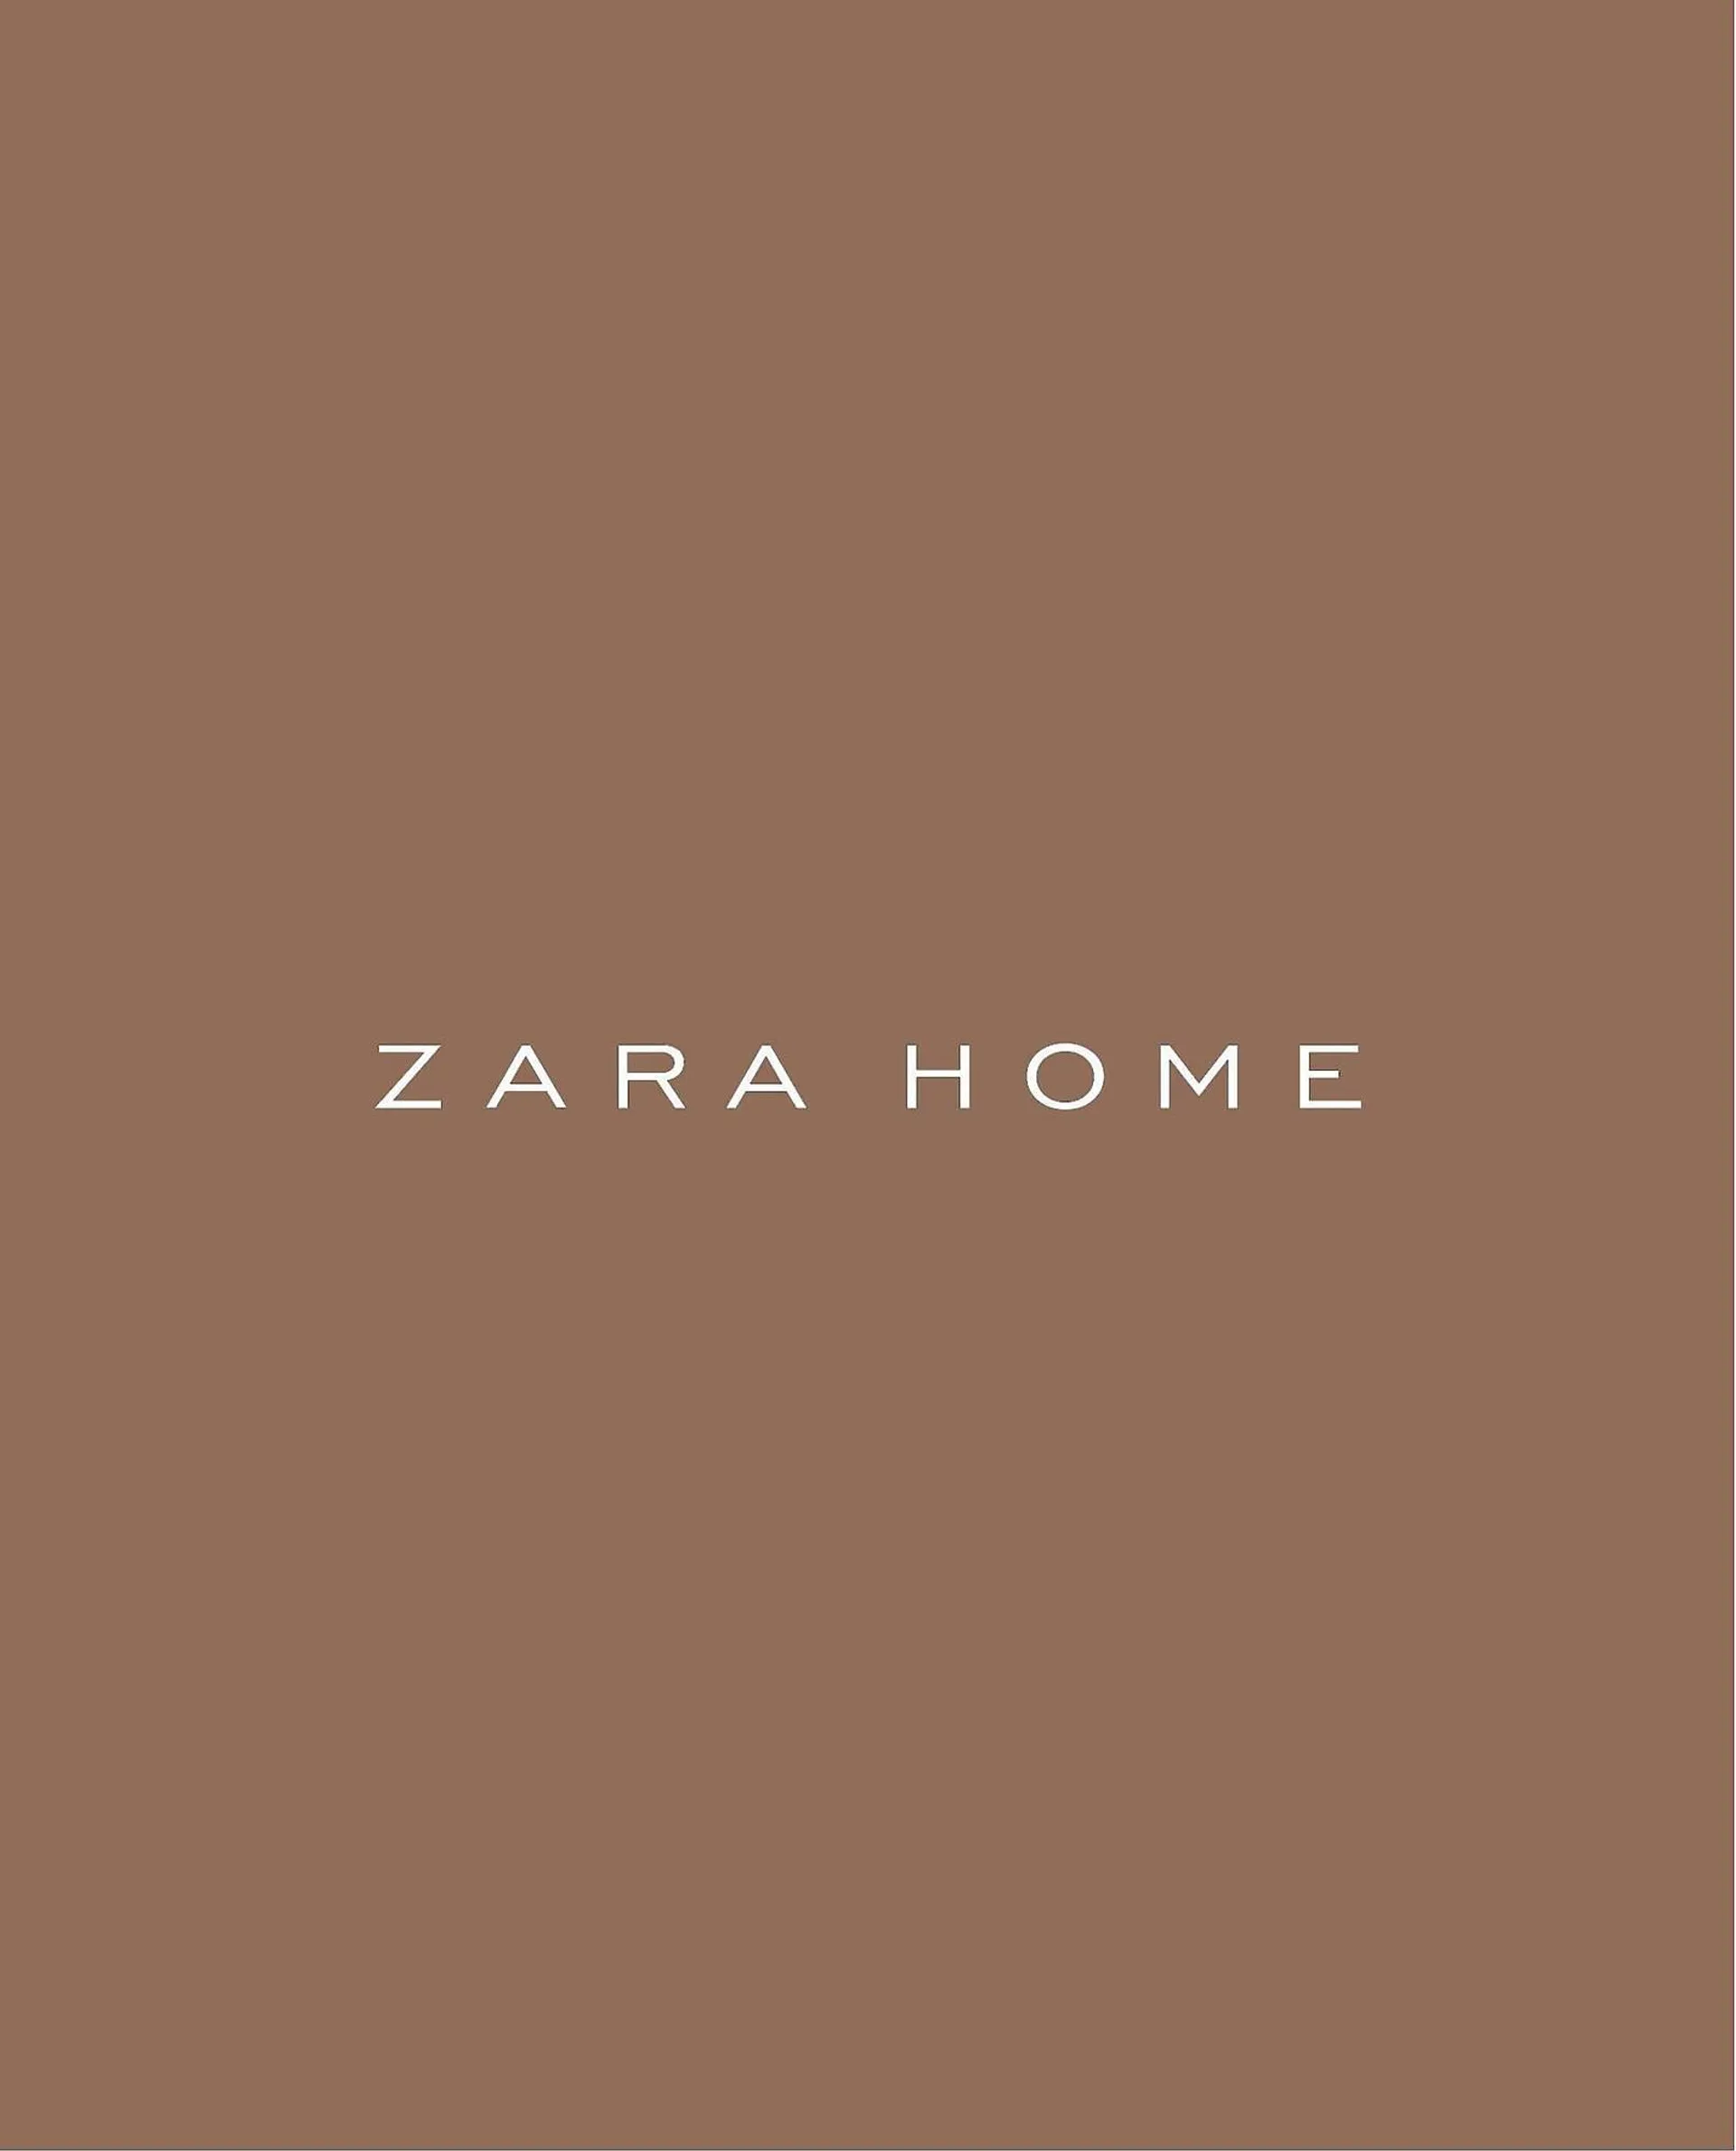 ZARA HOME flyer - 12